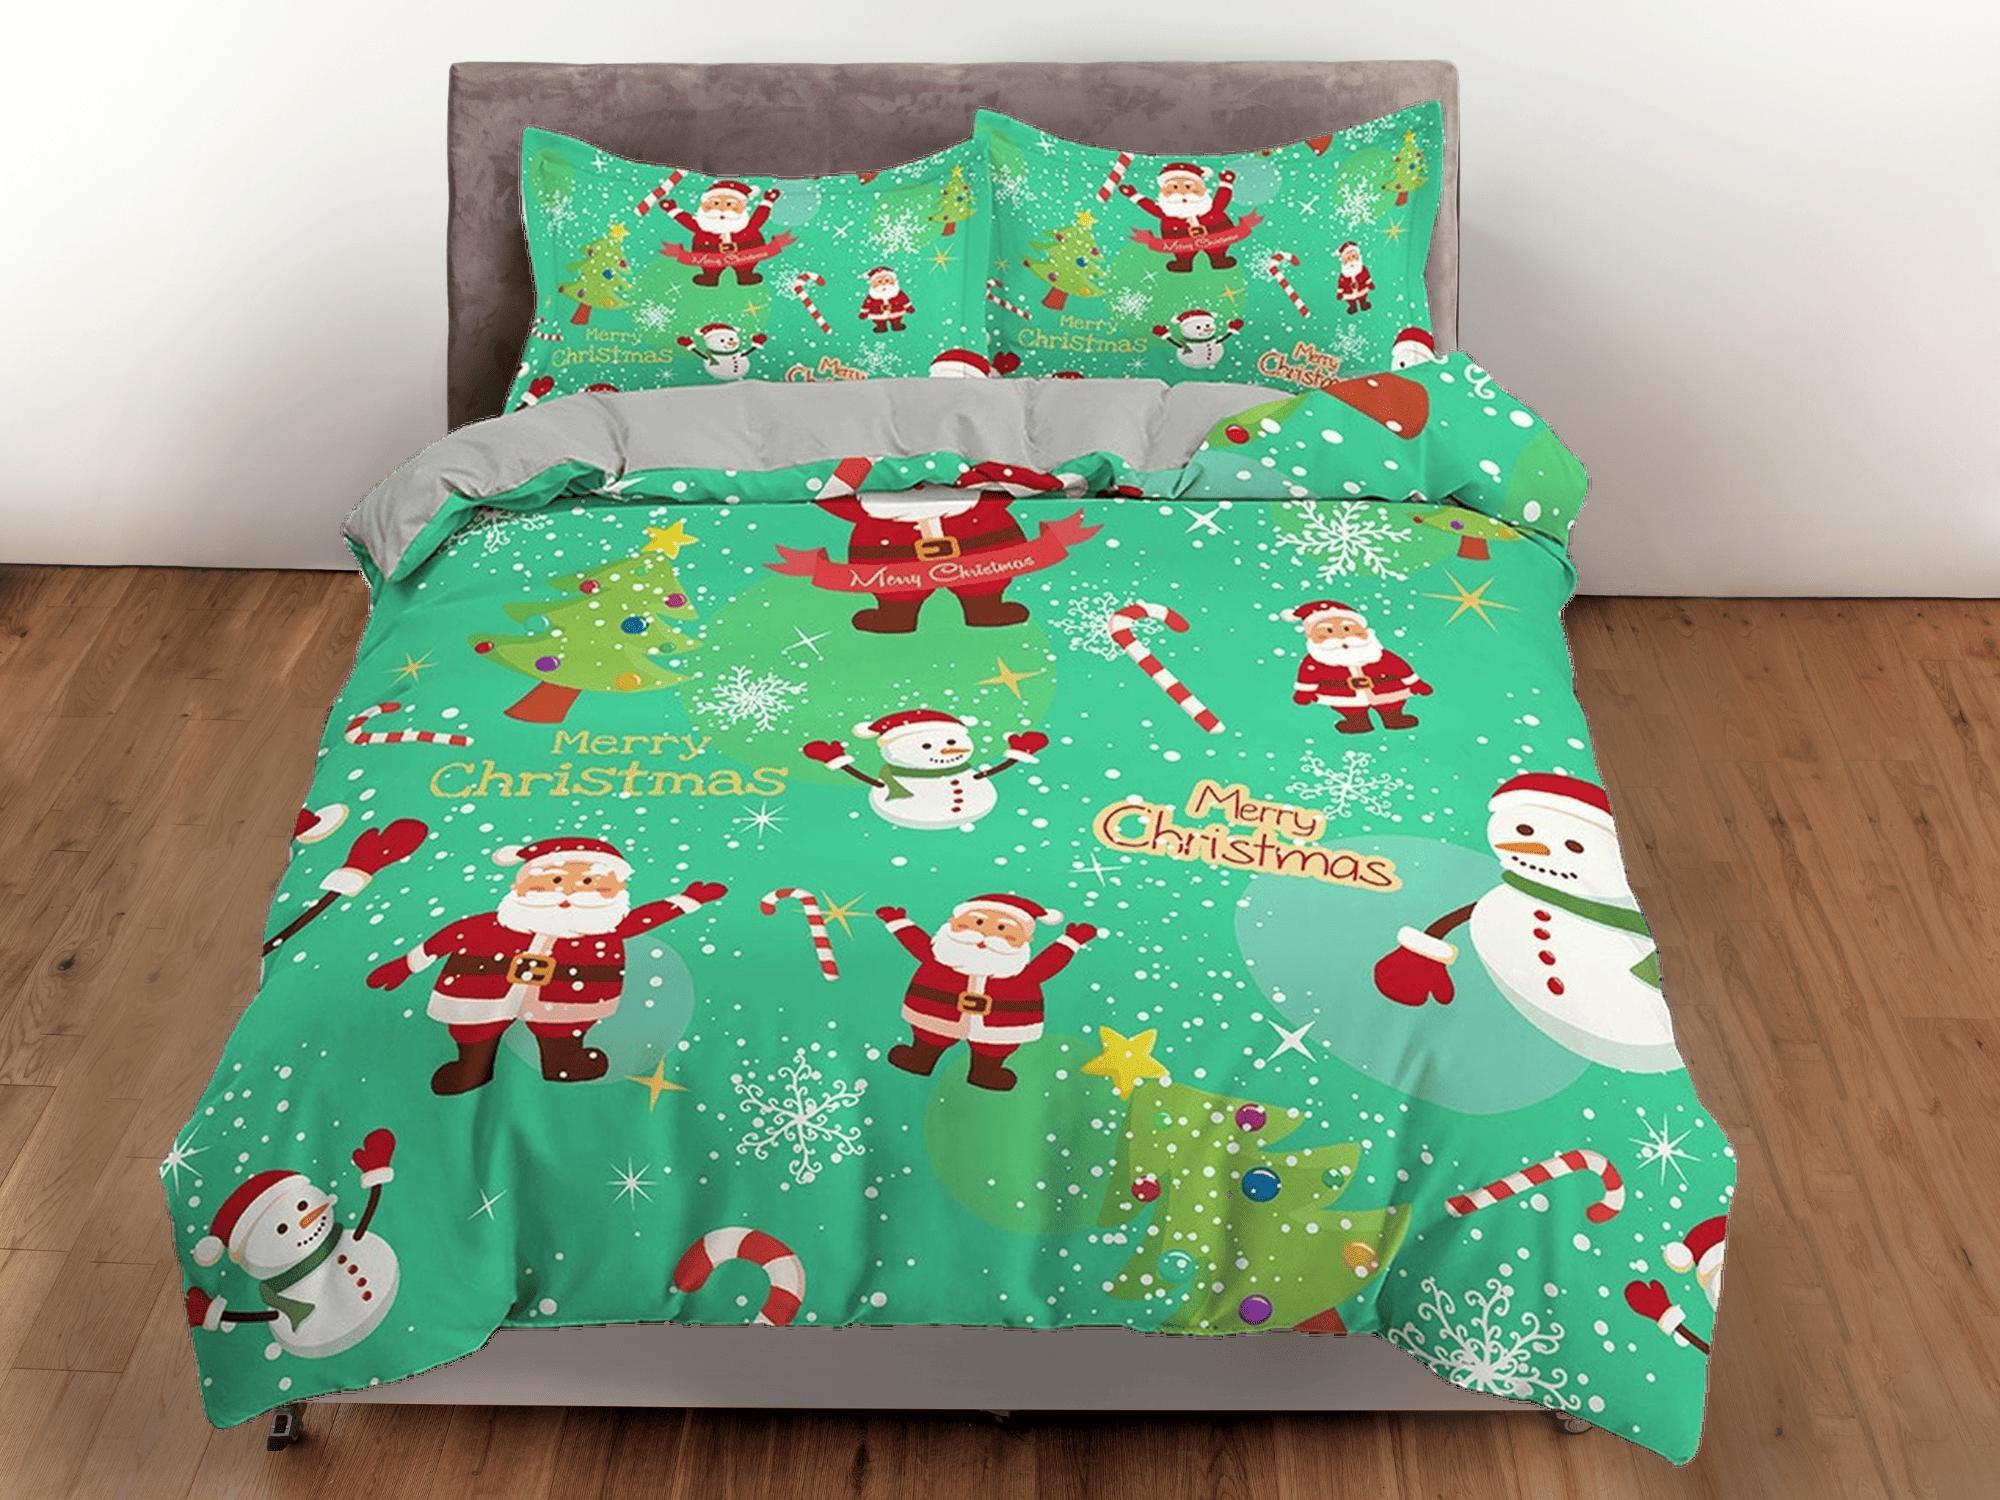 daintyduvet Green santa claus and snowman duvet cover set, christmas full size bedding & pillowcase, college bedding, crib toddler bedding, holiday gift